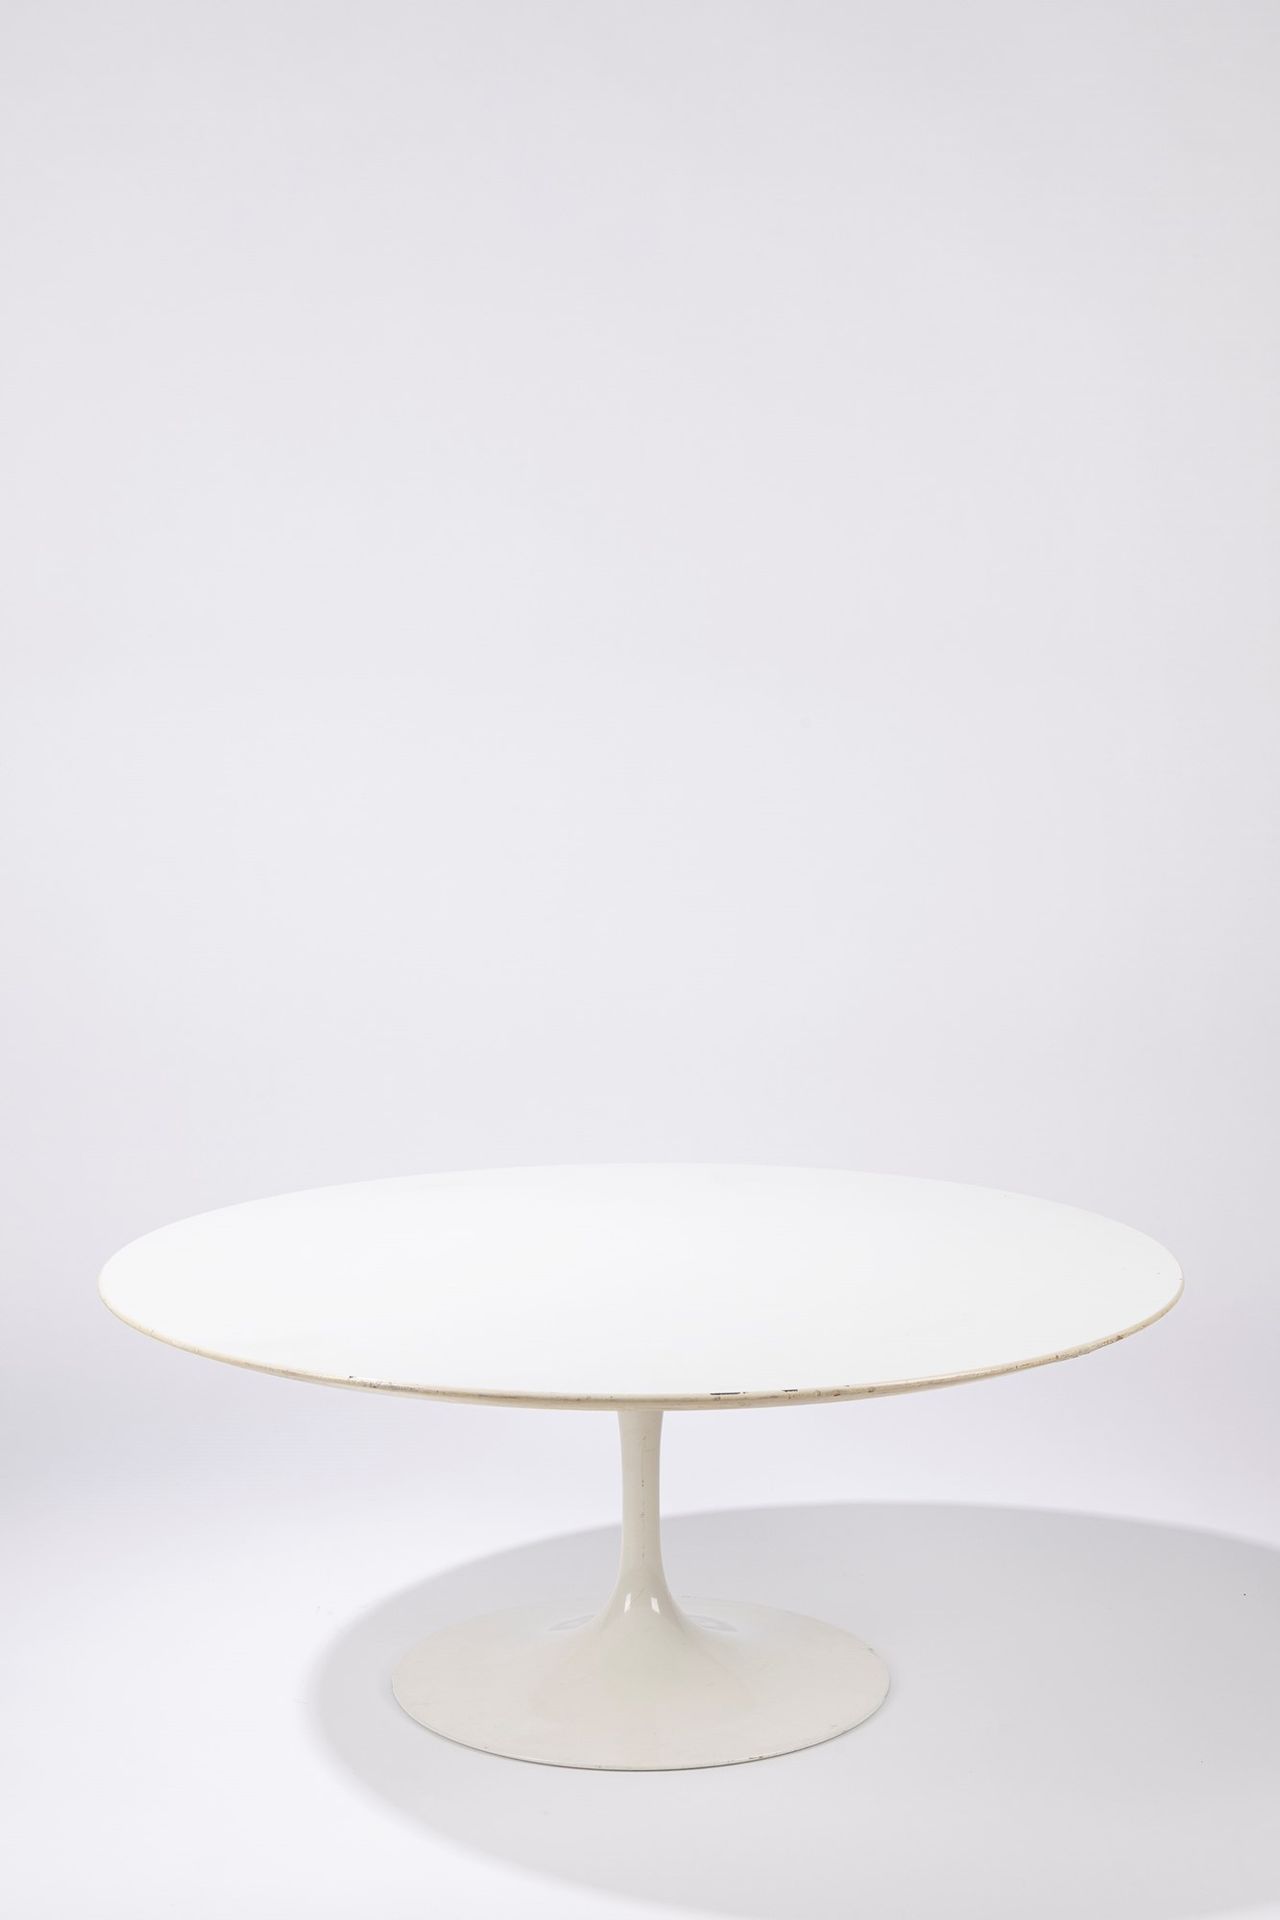 Eero Saarinen Coffee table, 1957

h 37 x diam 91 cm
Oval laminated plane, alumin&hellip;